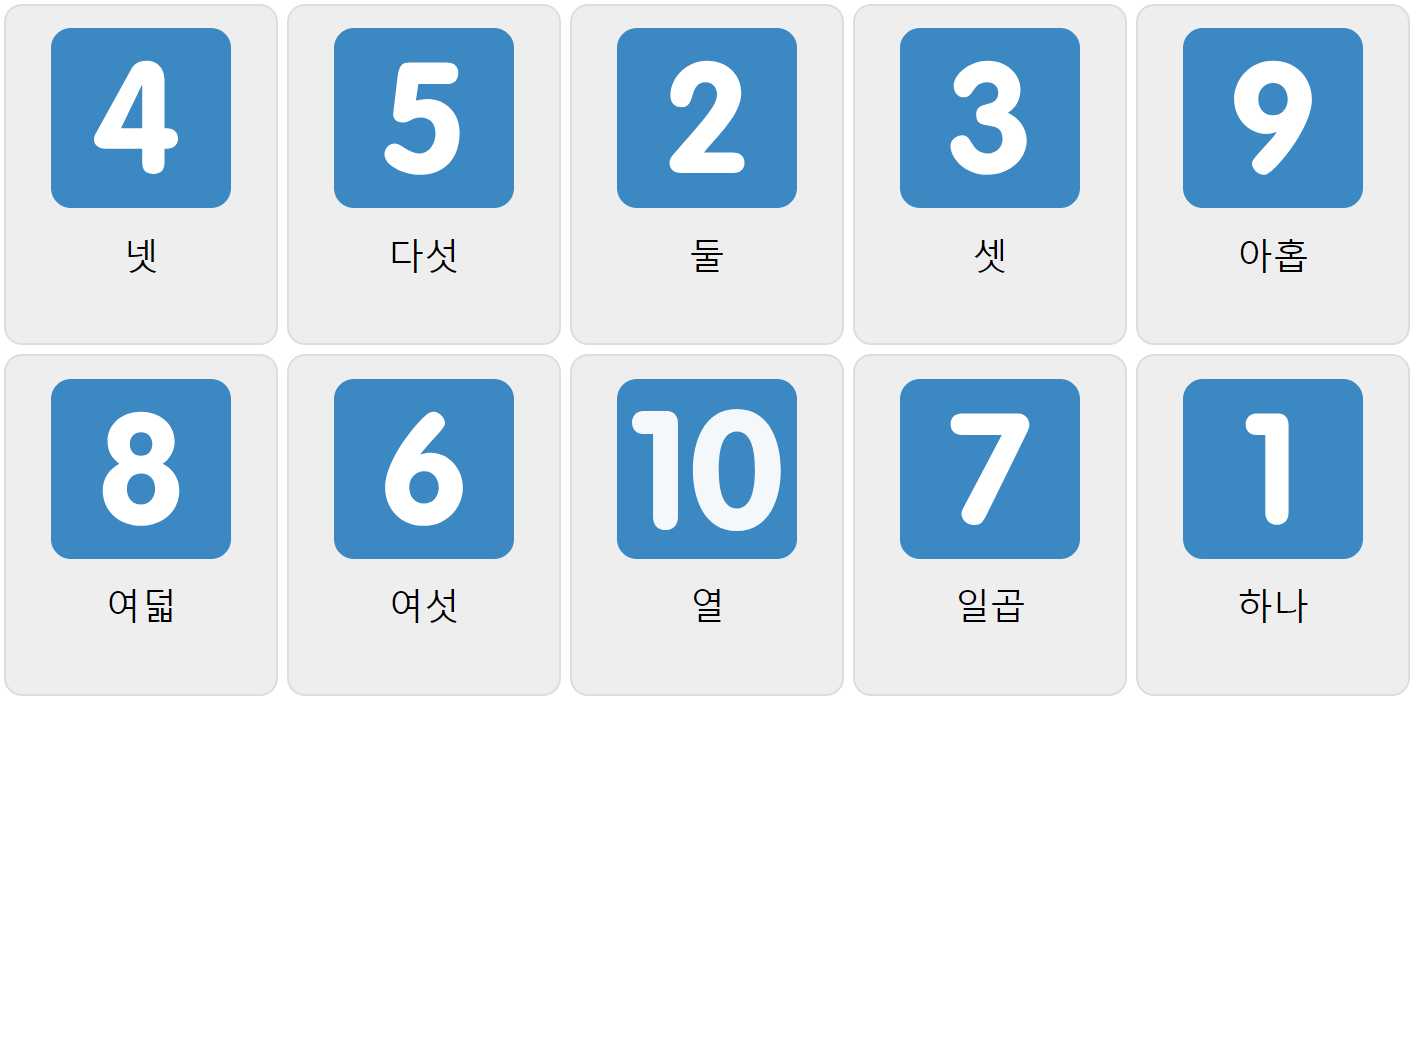 Цифры 1-10 на корейском языке